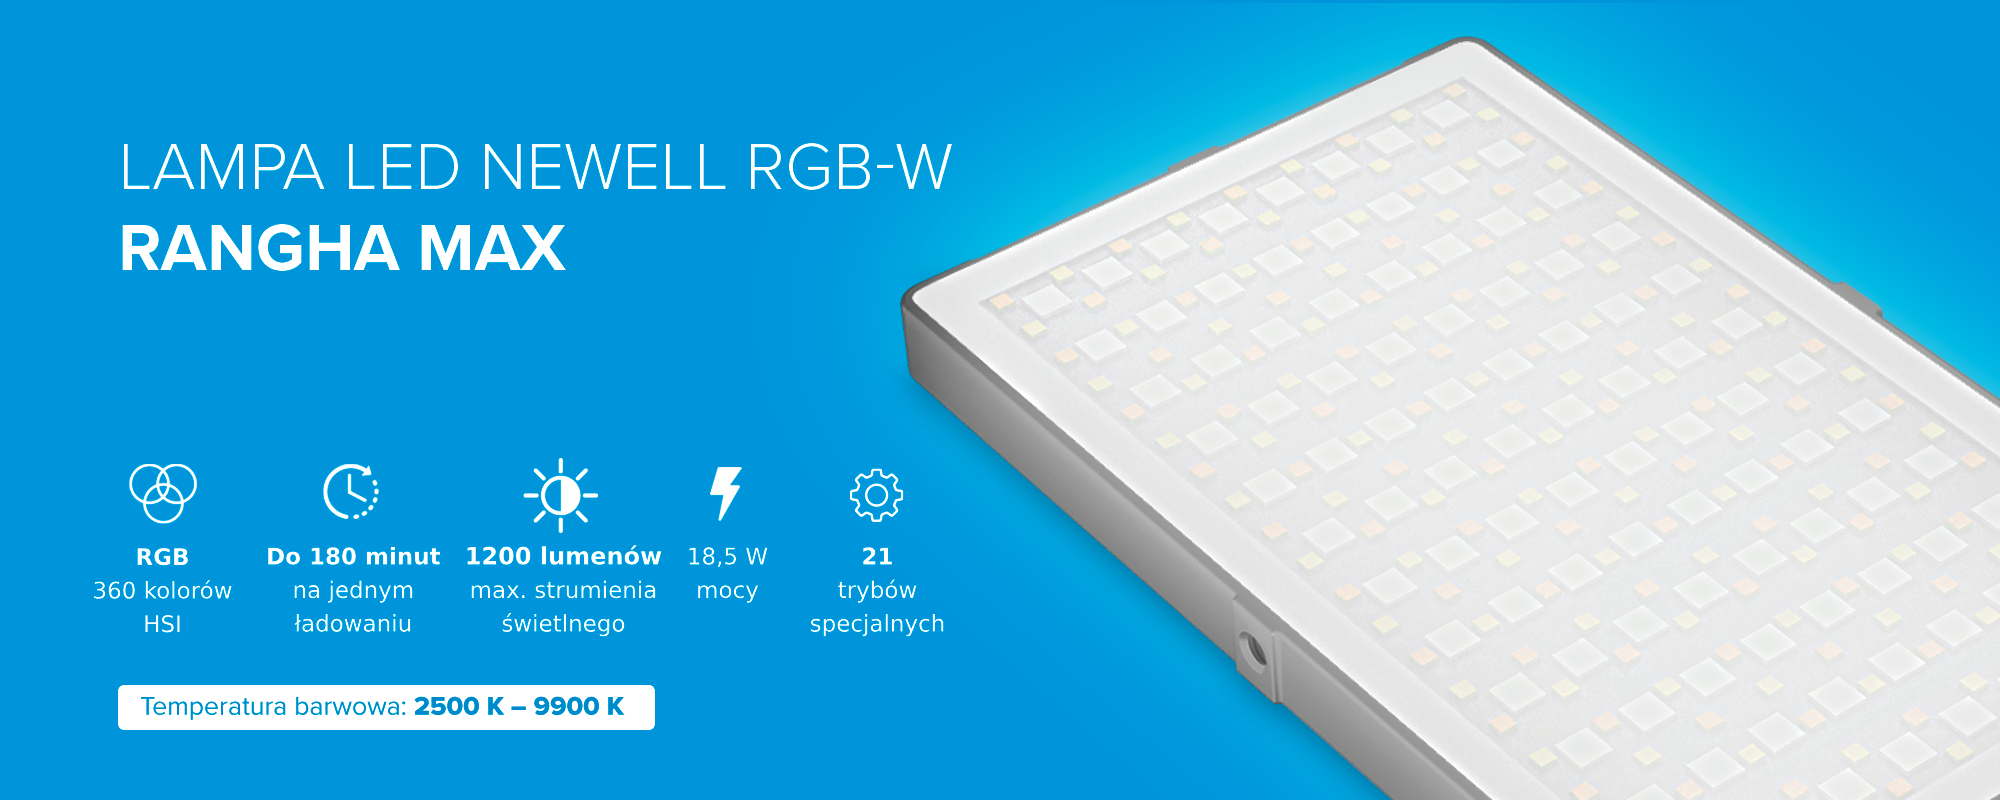 LED Newell RGB-W Rangha Max